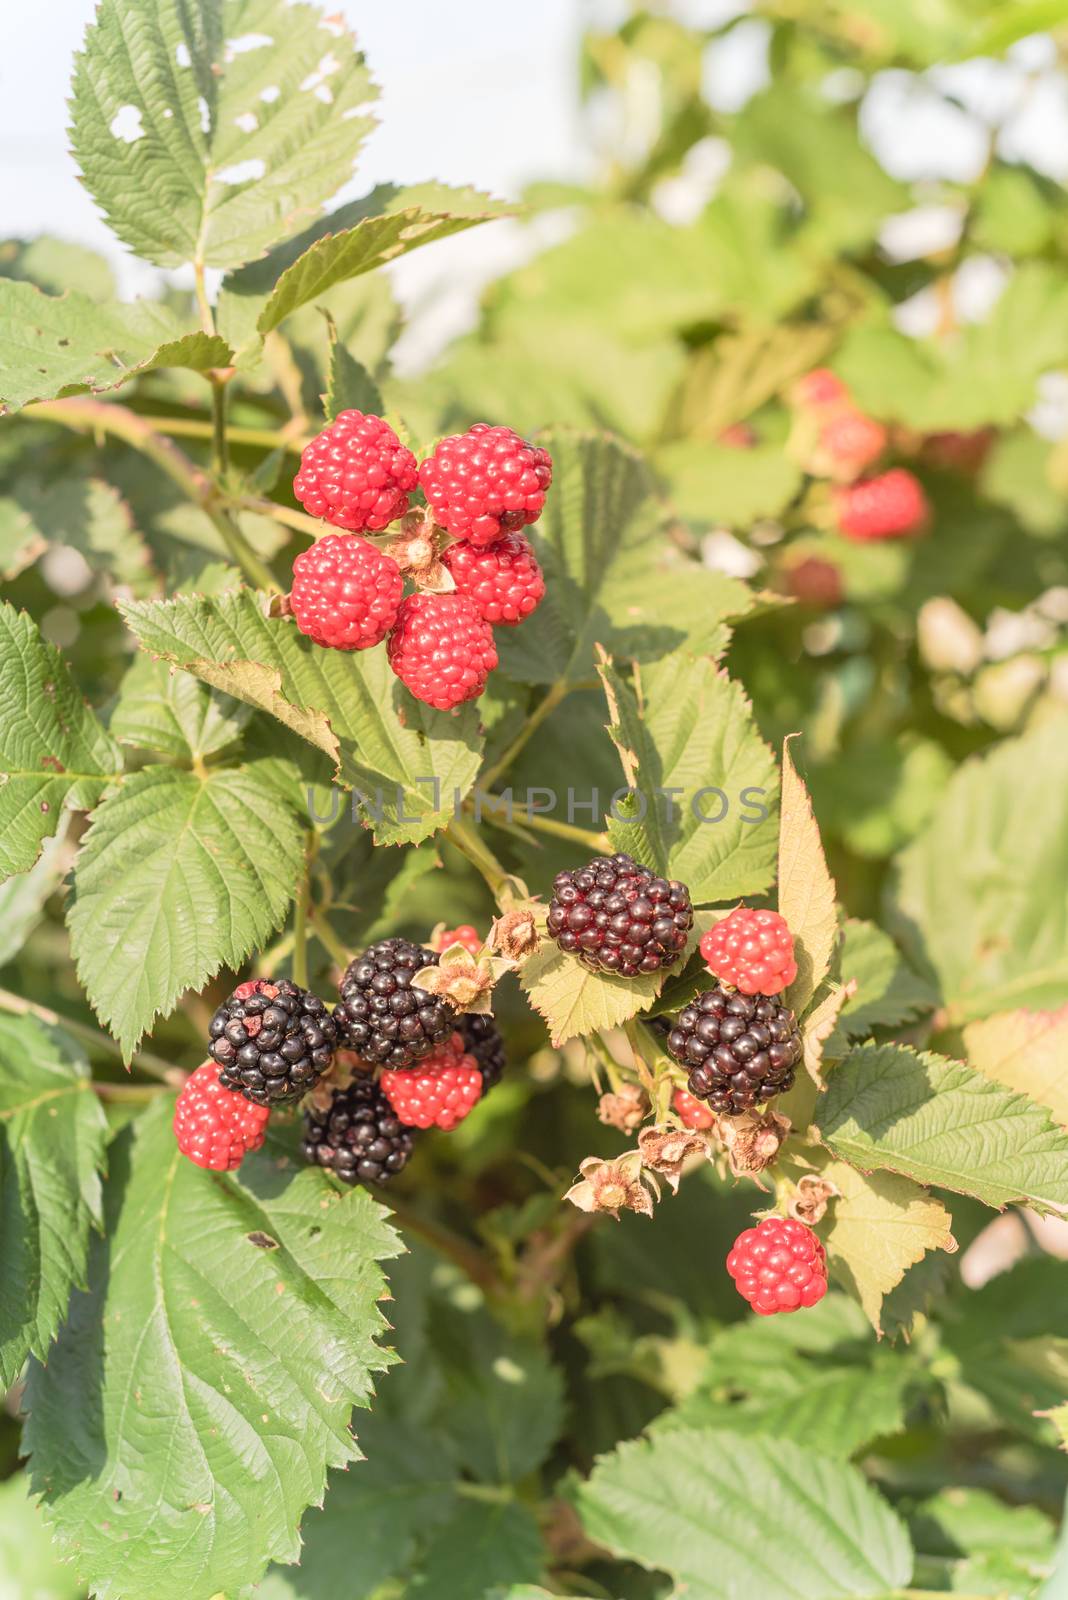 Group of organic ripe and unripe blackberries growing on tree in Texas, America by trongnguyen